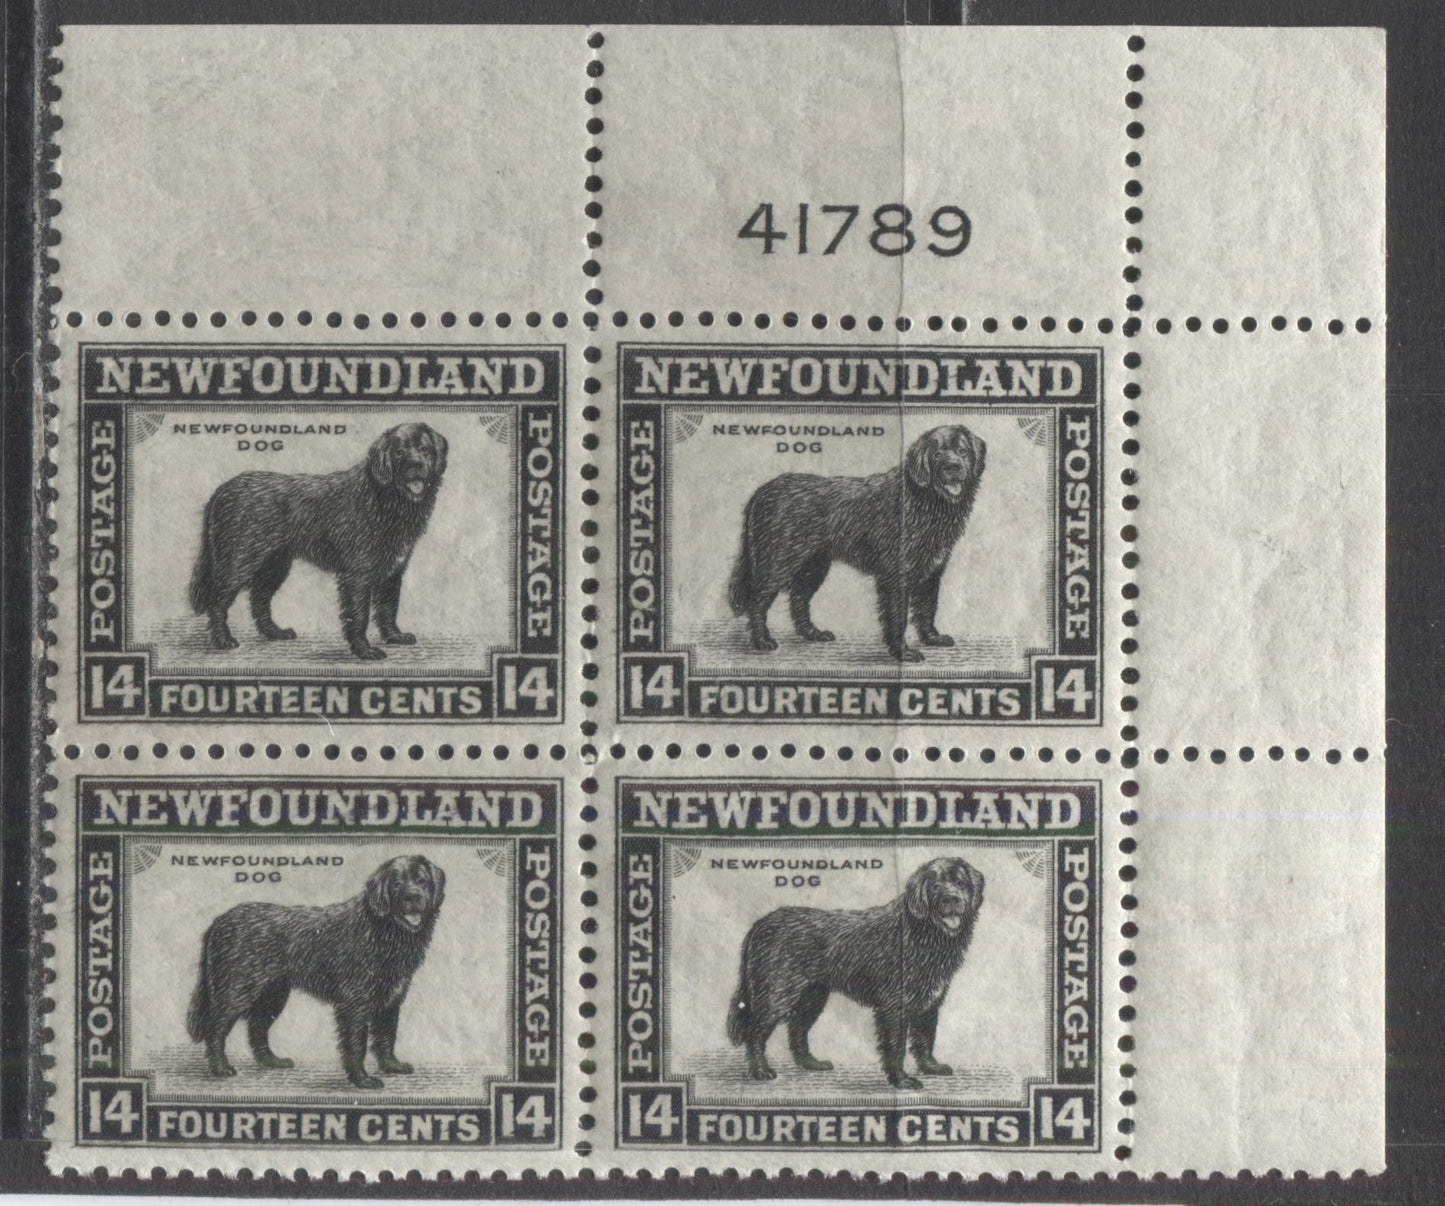 Lot 226 Newfoundland #261 14c Black Newfoundland Dog, 1941-1944 Resources Re-Issue, A VFNH UR Plate 41789 Block Of 4